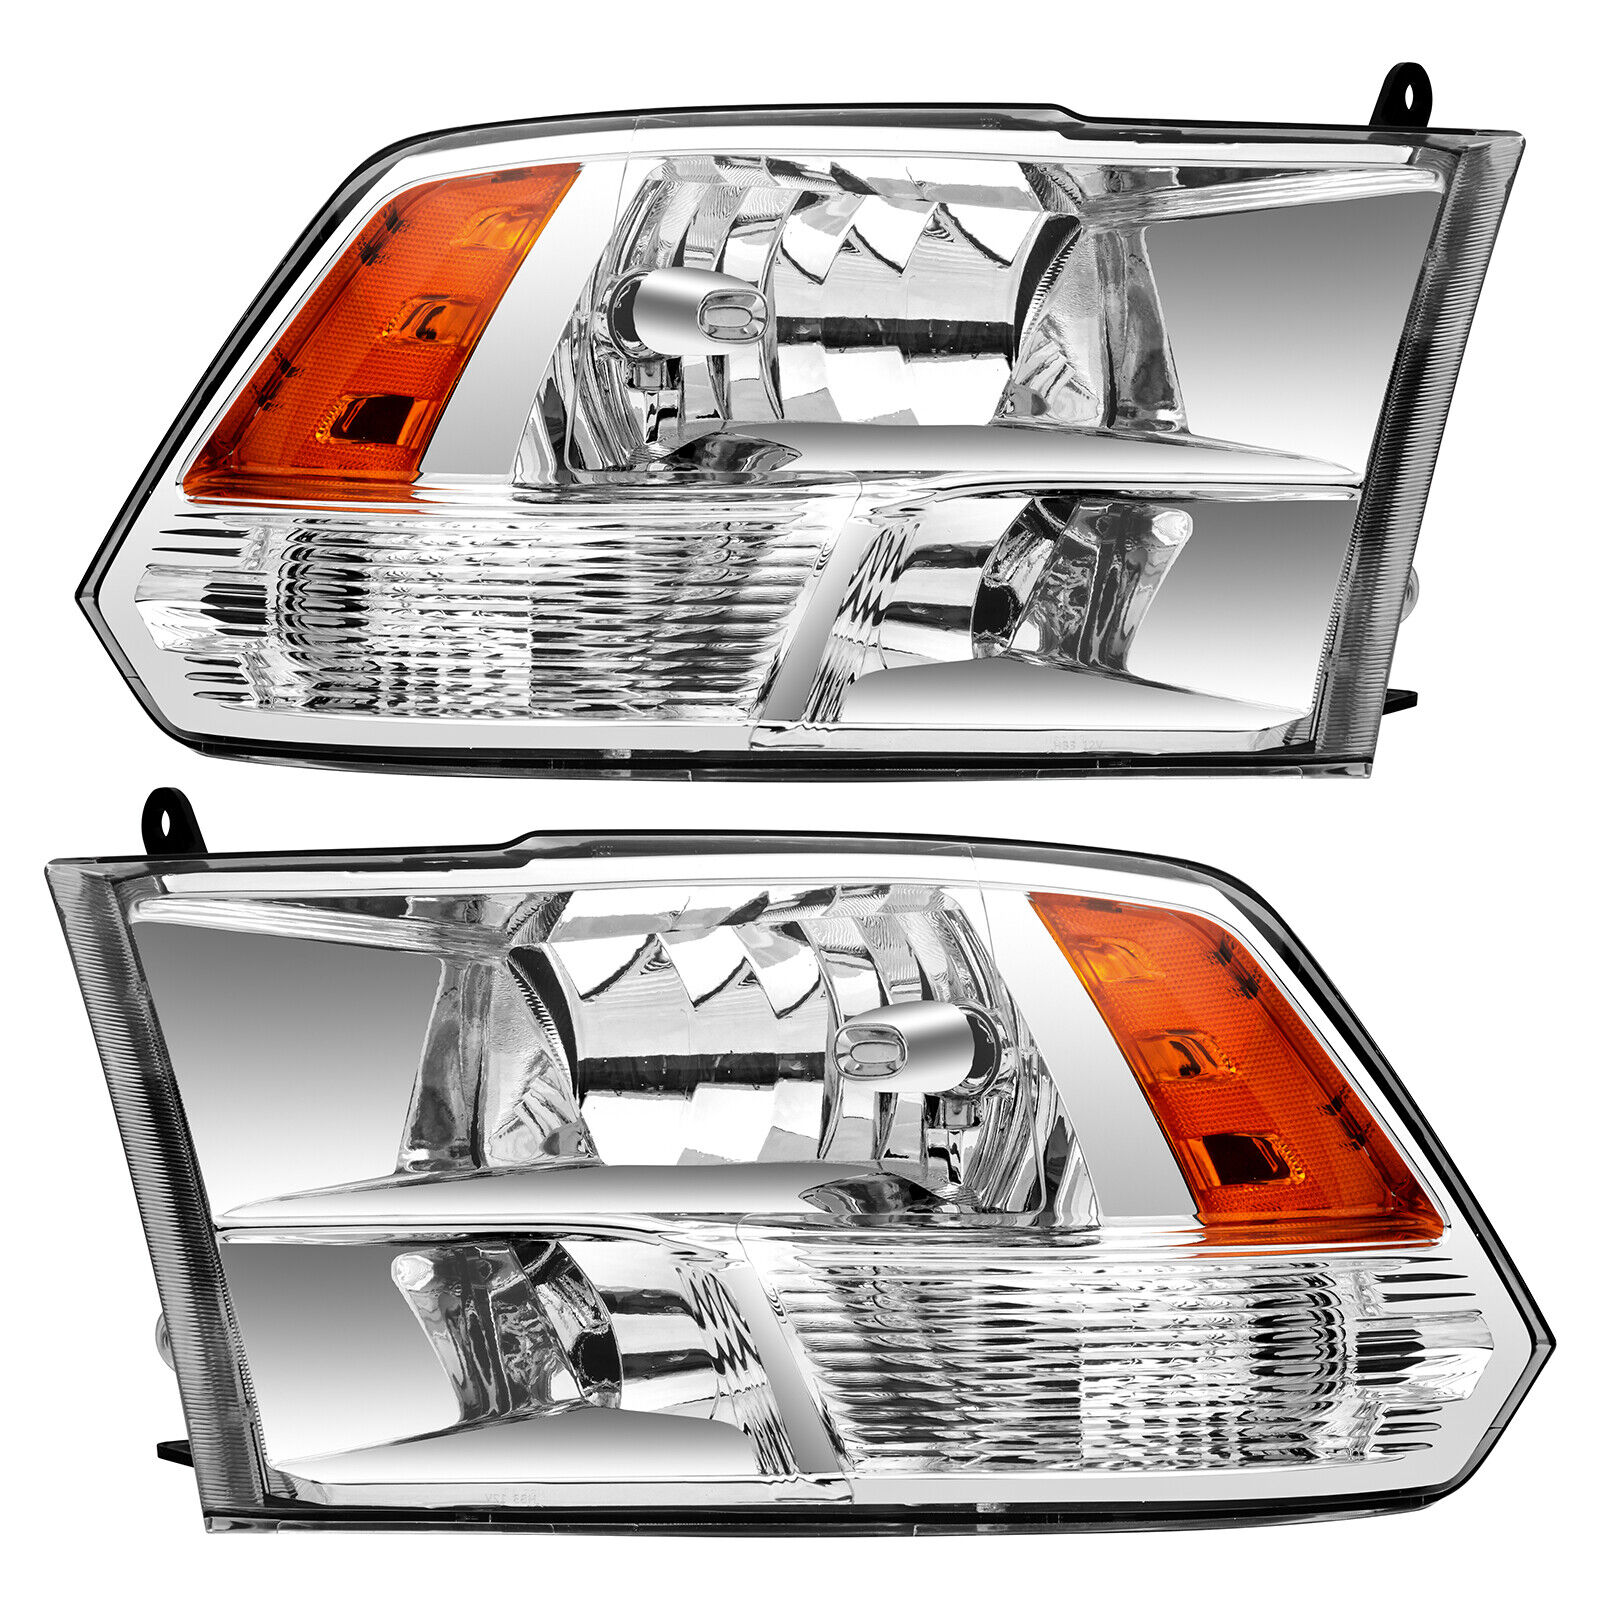 For 09-18 Dodge Ram 1500,10-18 Dodge Ram 2500 3500 Headlights Chrome W/ Amber